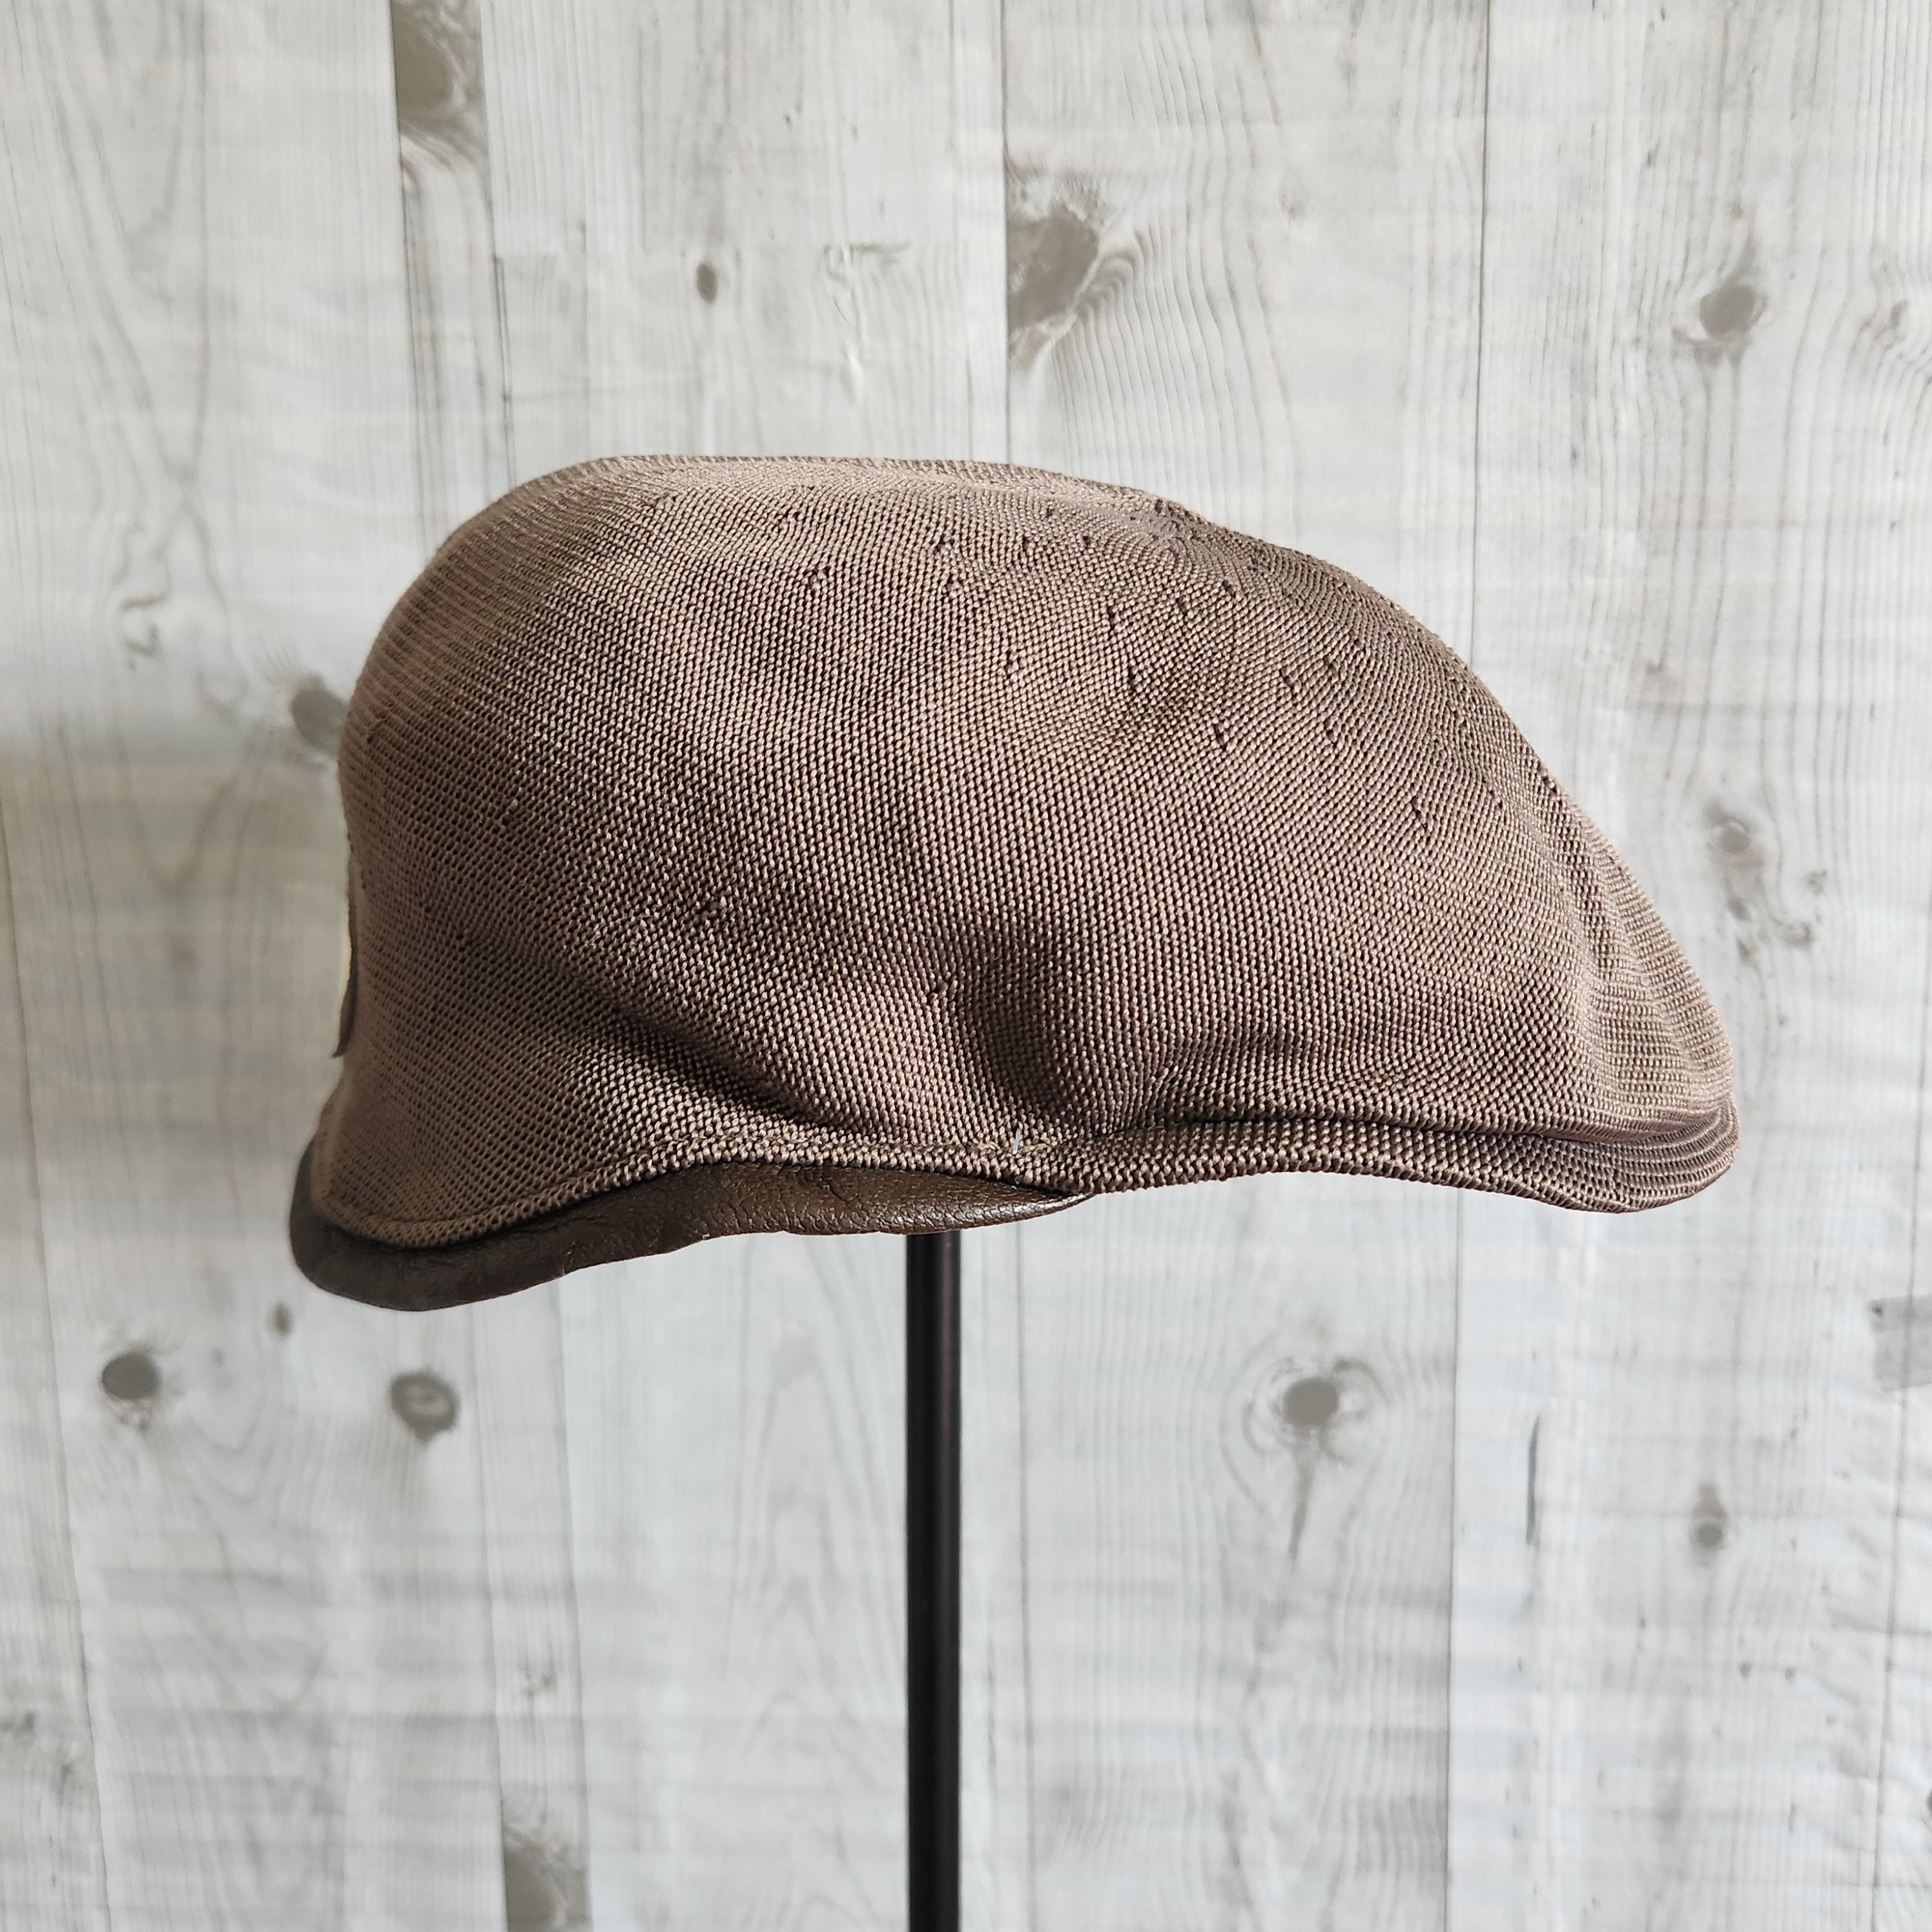 Vintage Kangol Ivy Cap / Flat Cap Size Large - 10